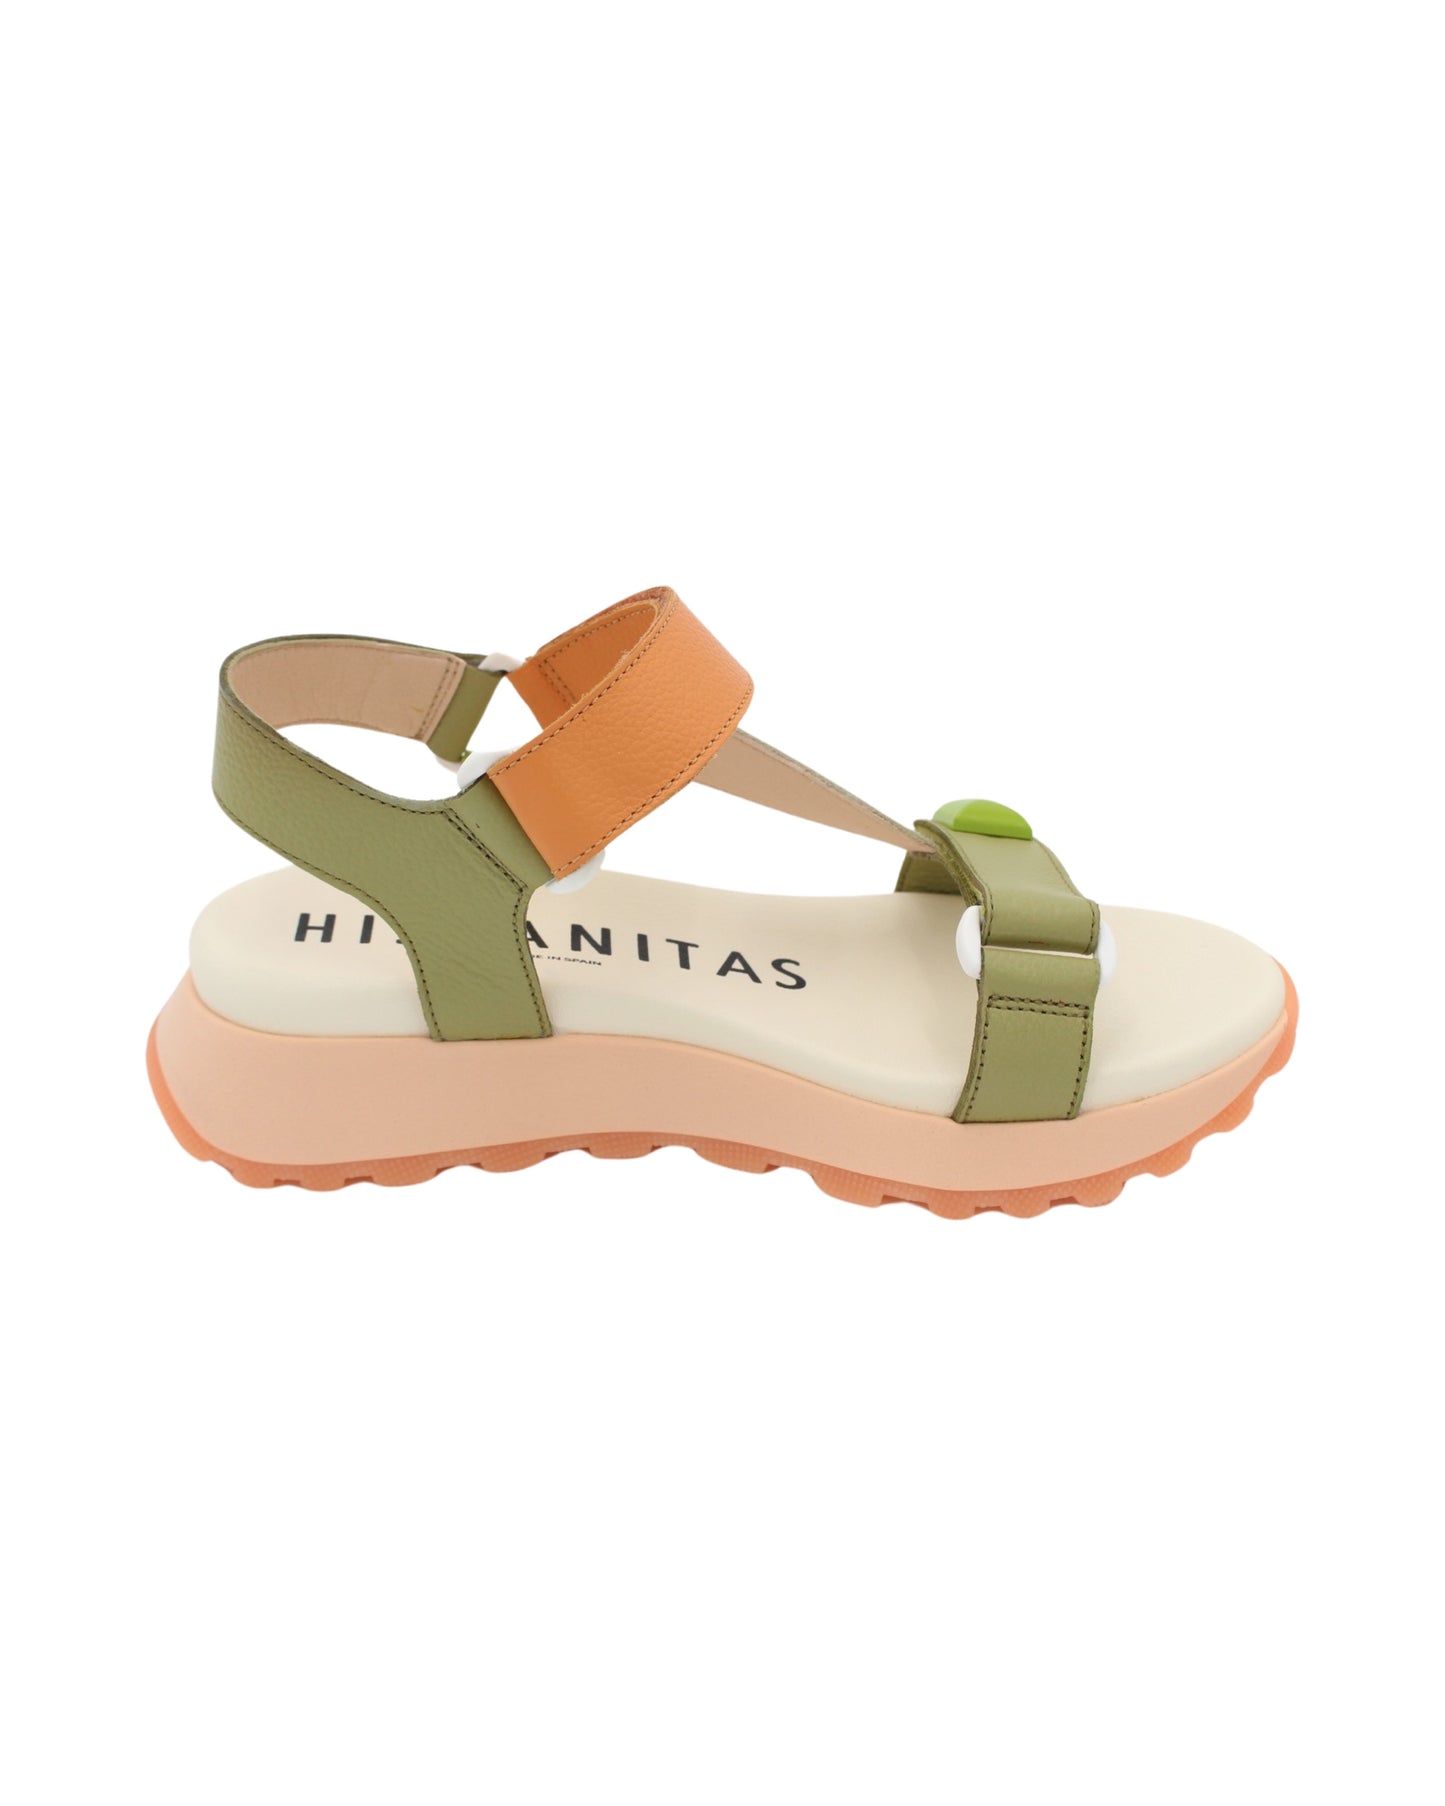 Hispanitas - Ladies Shoes Sandals Green multi (1955)